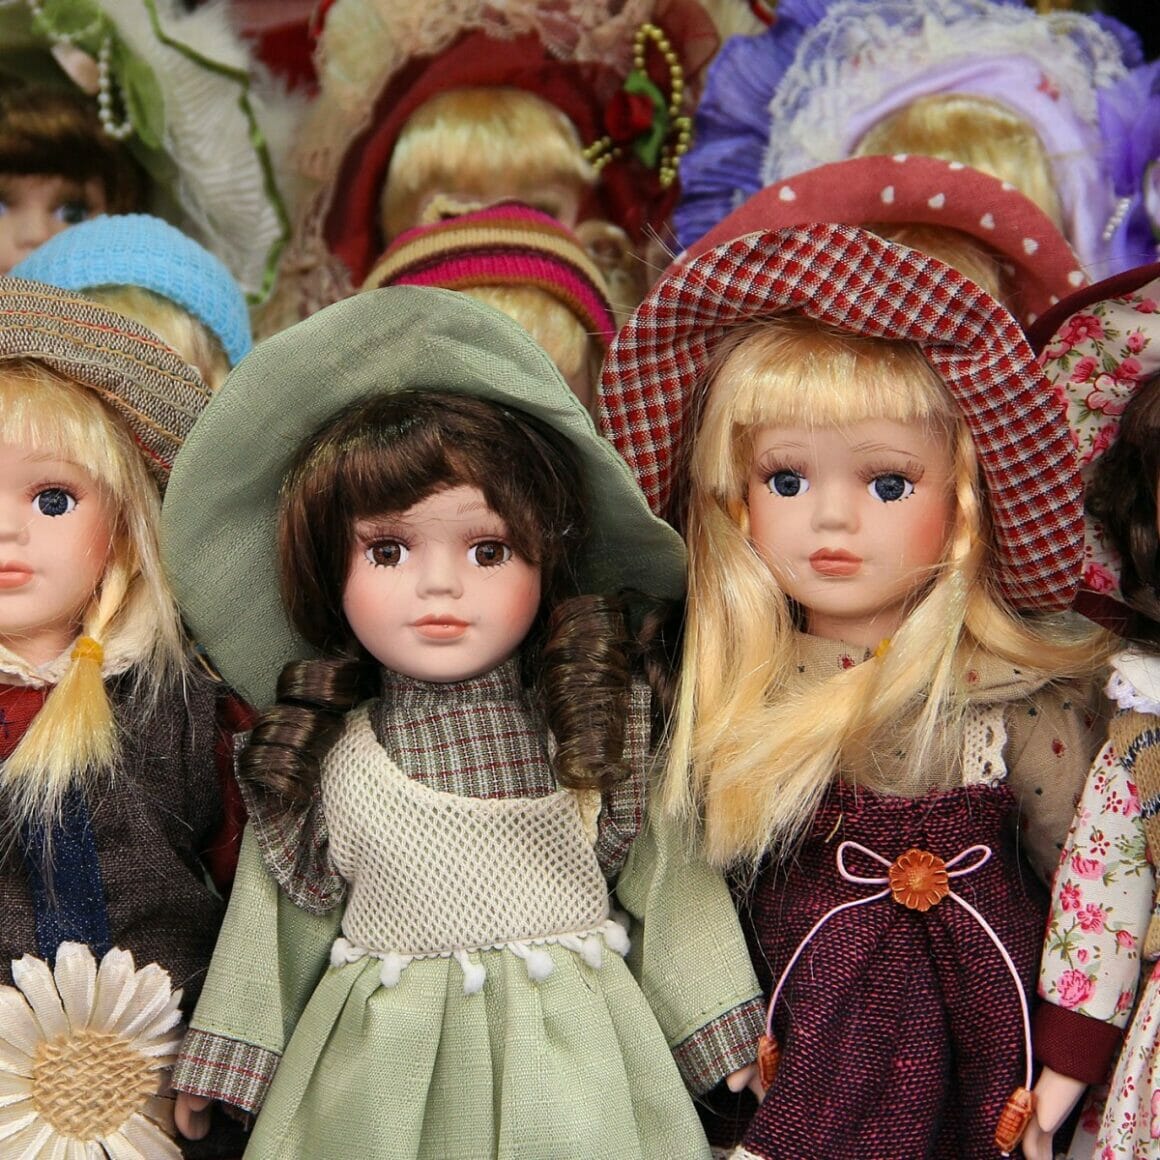 Care and Preservation of Porcelain Dolls